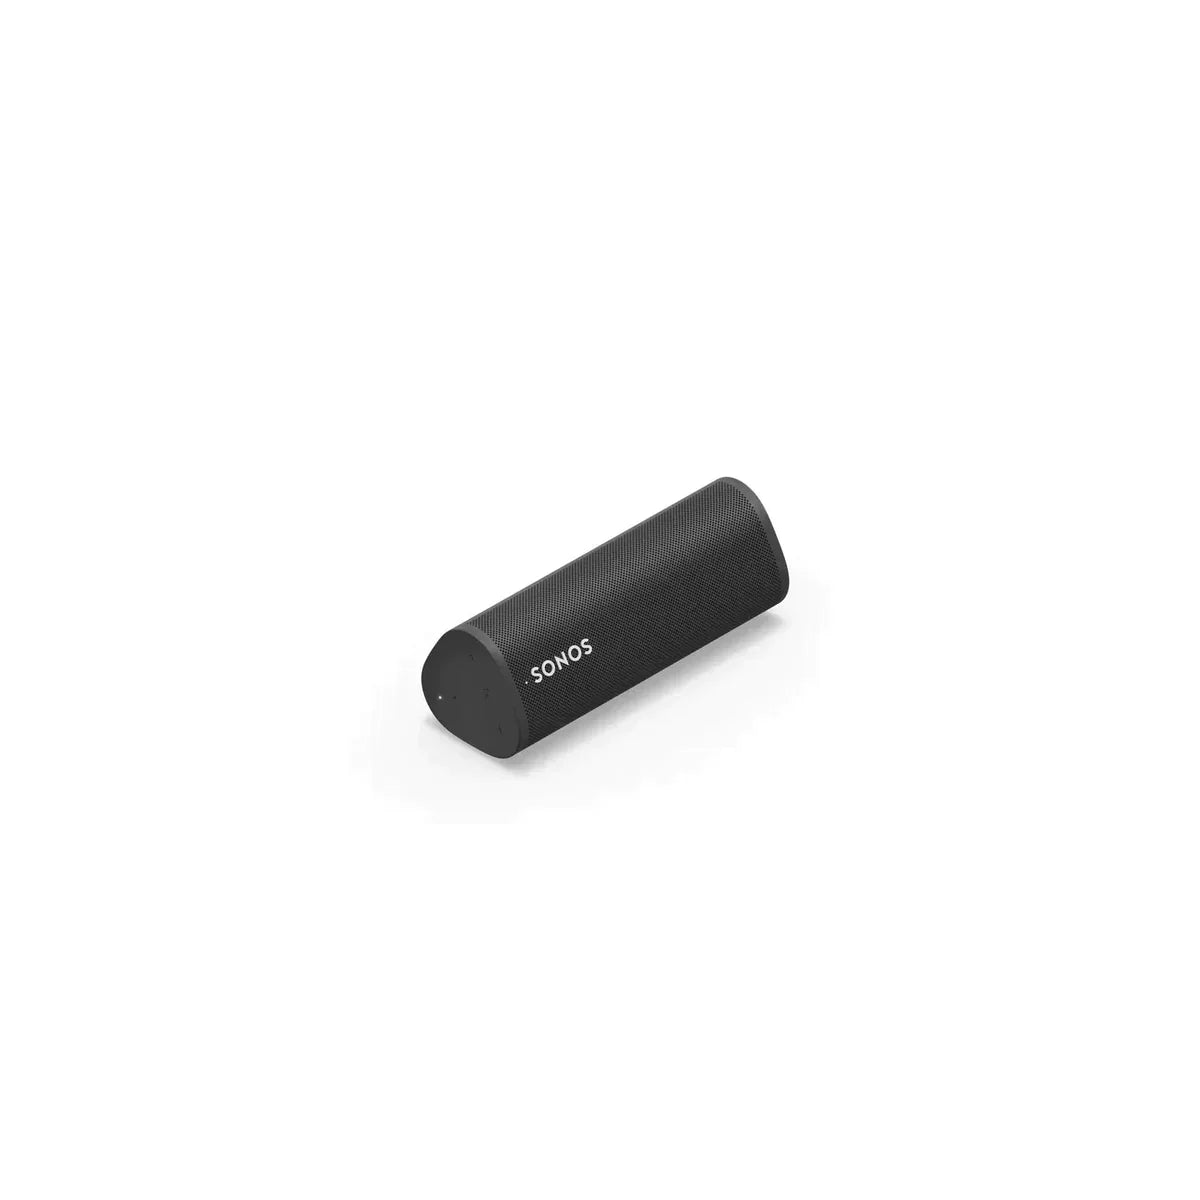 Sonos Roam Smart Speaker with Voice Control - Black - Refurbished Excellent